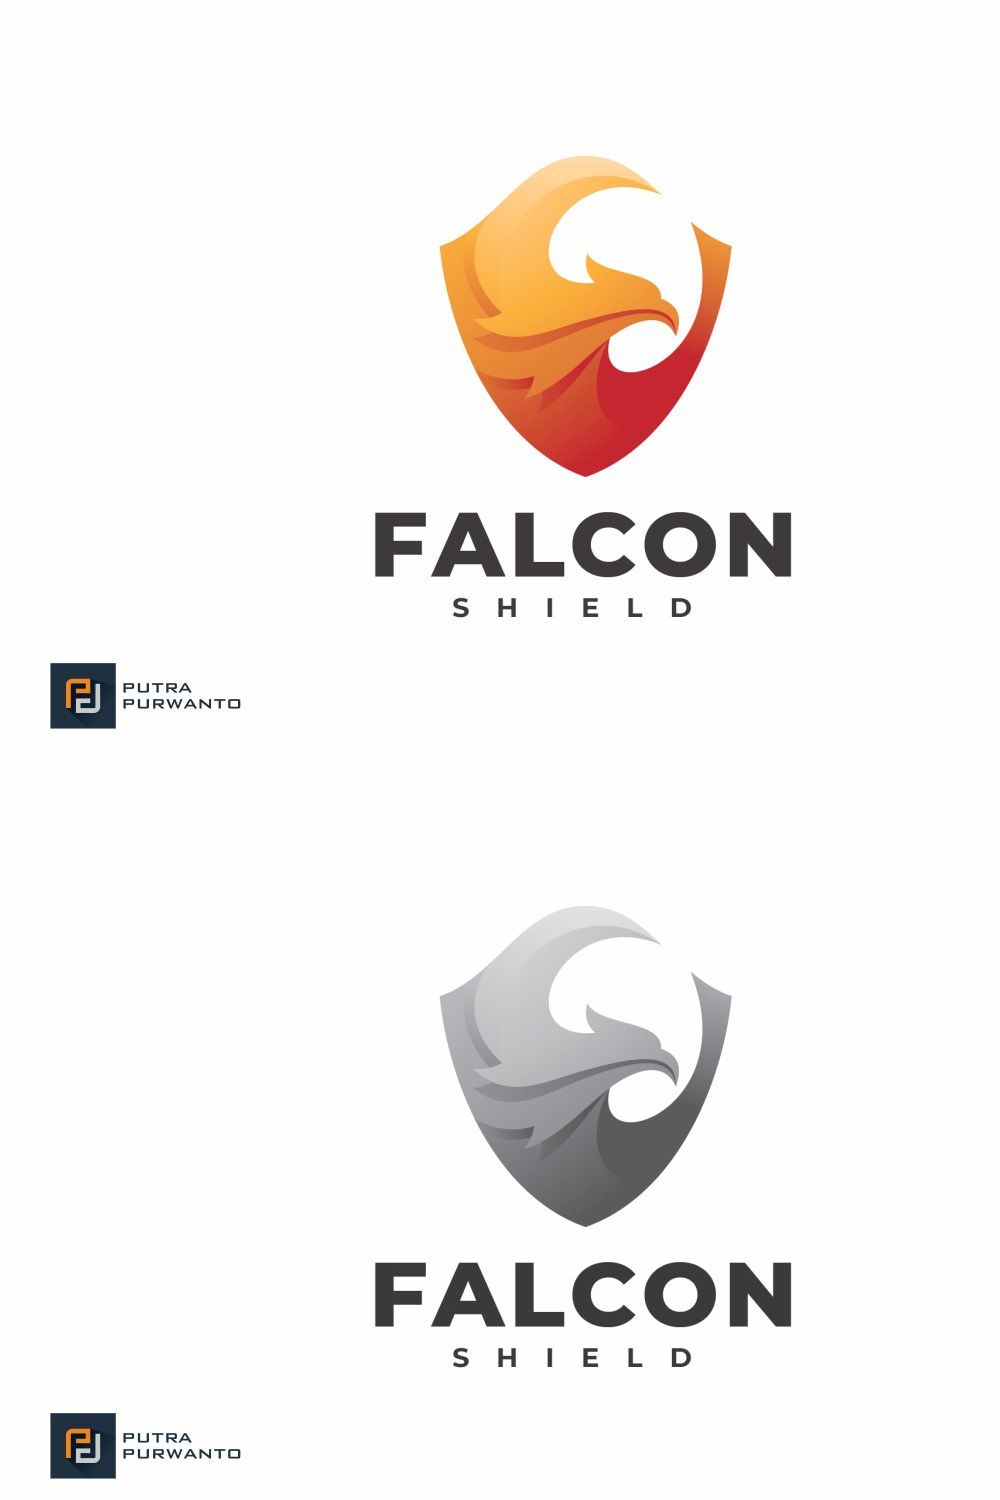 Falcon Shield - Logo Template pinterest preview image.